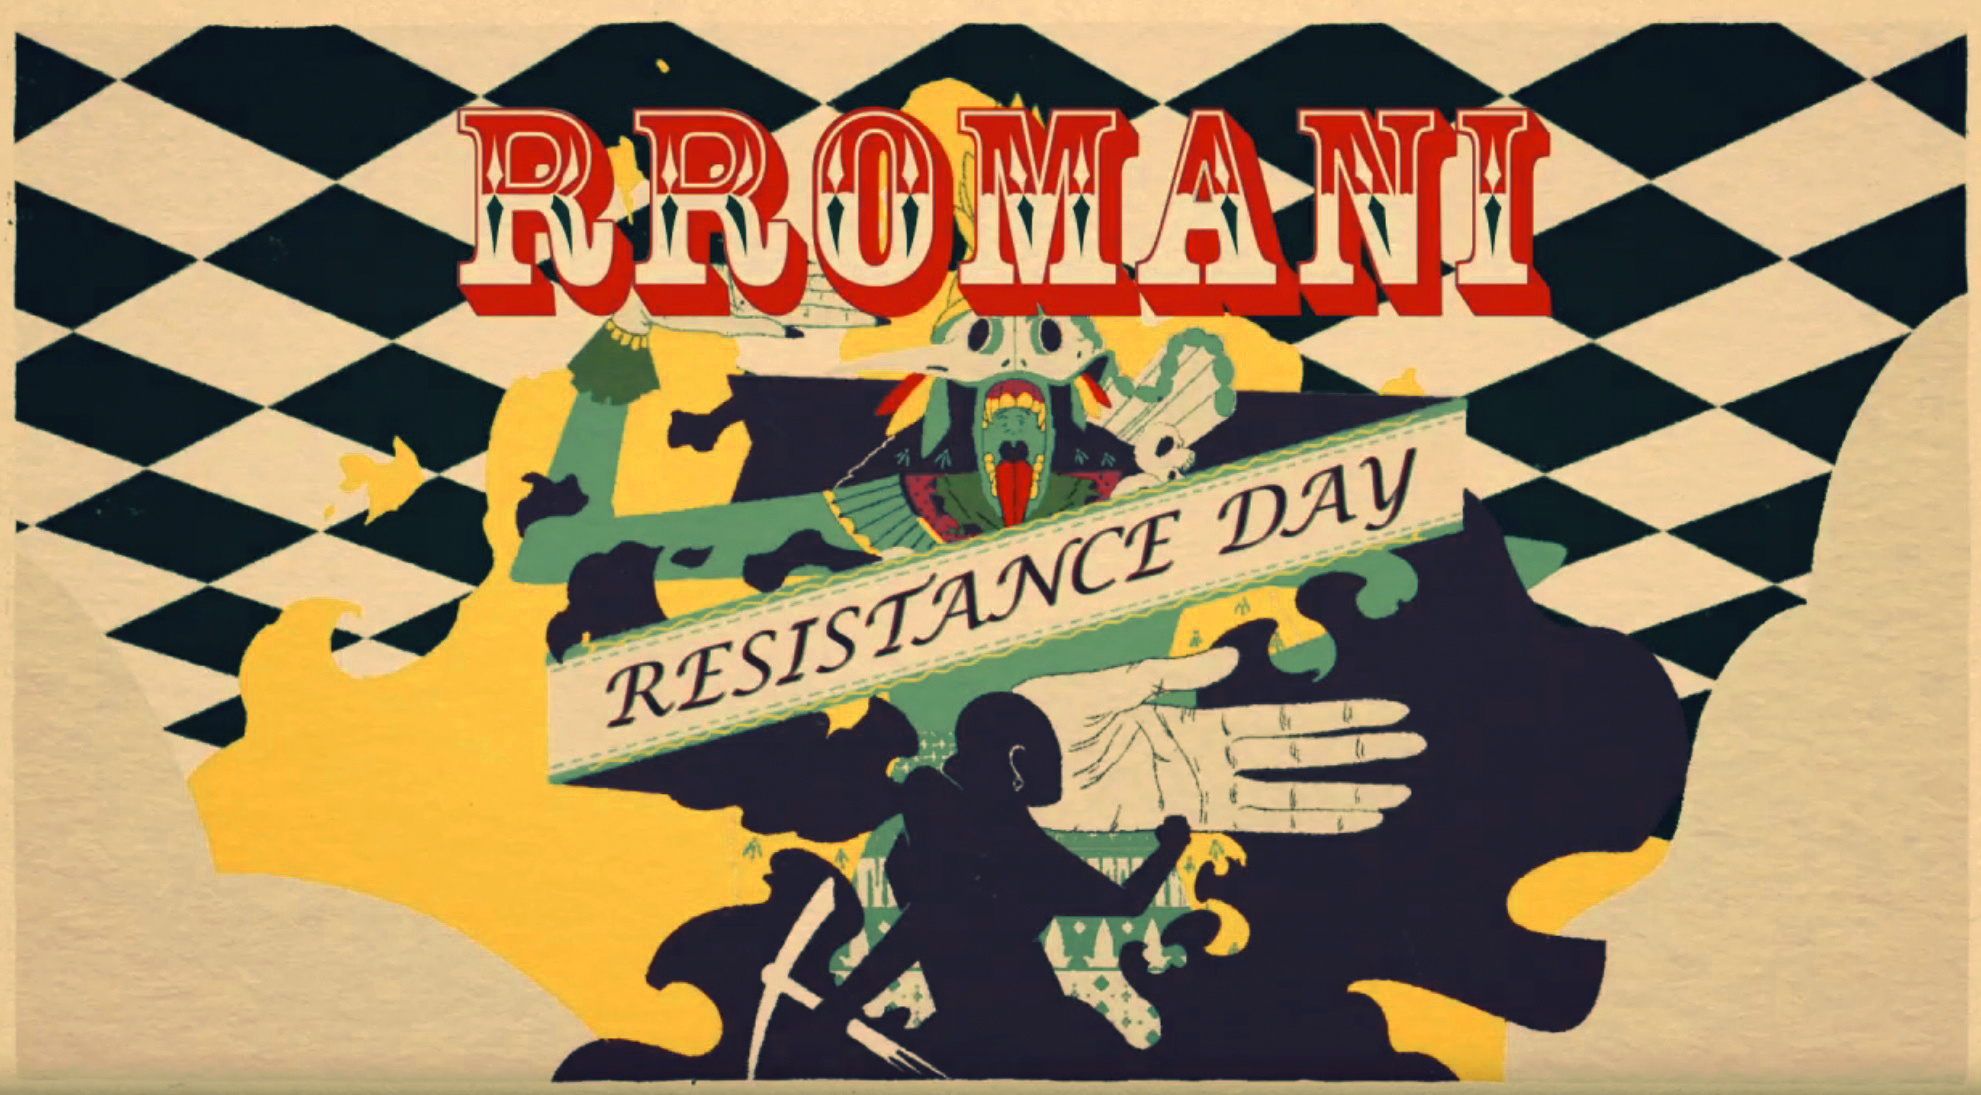 Rromani resistance day france 2018